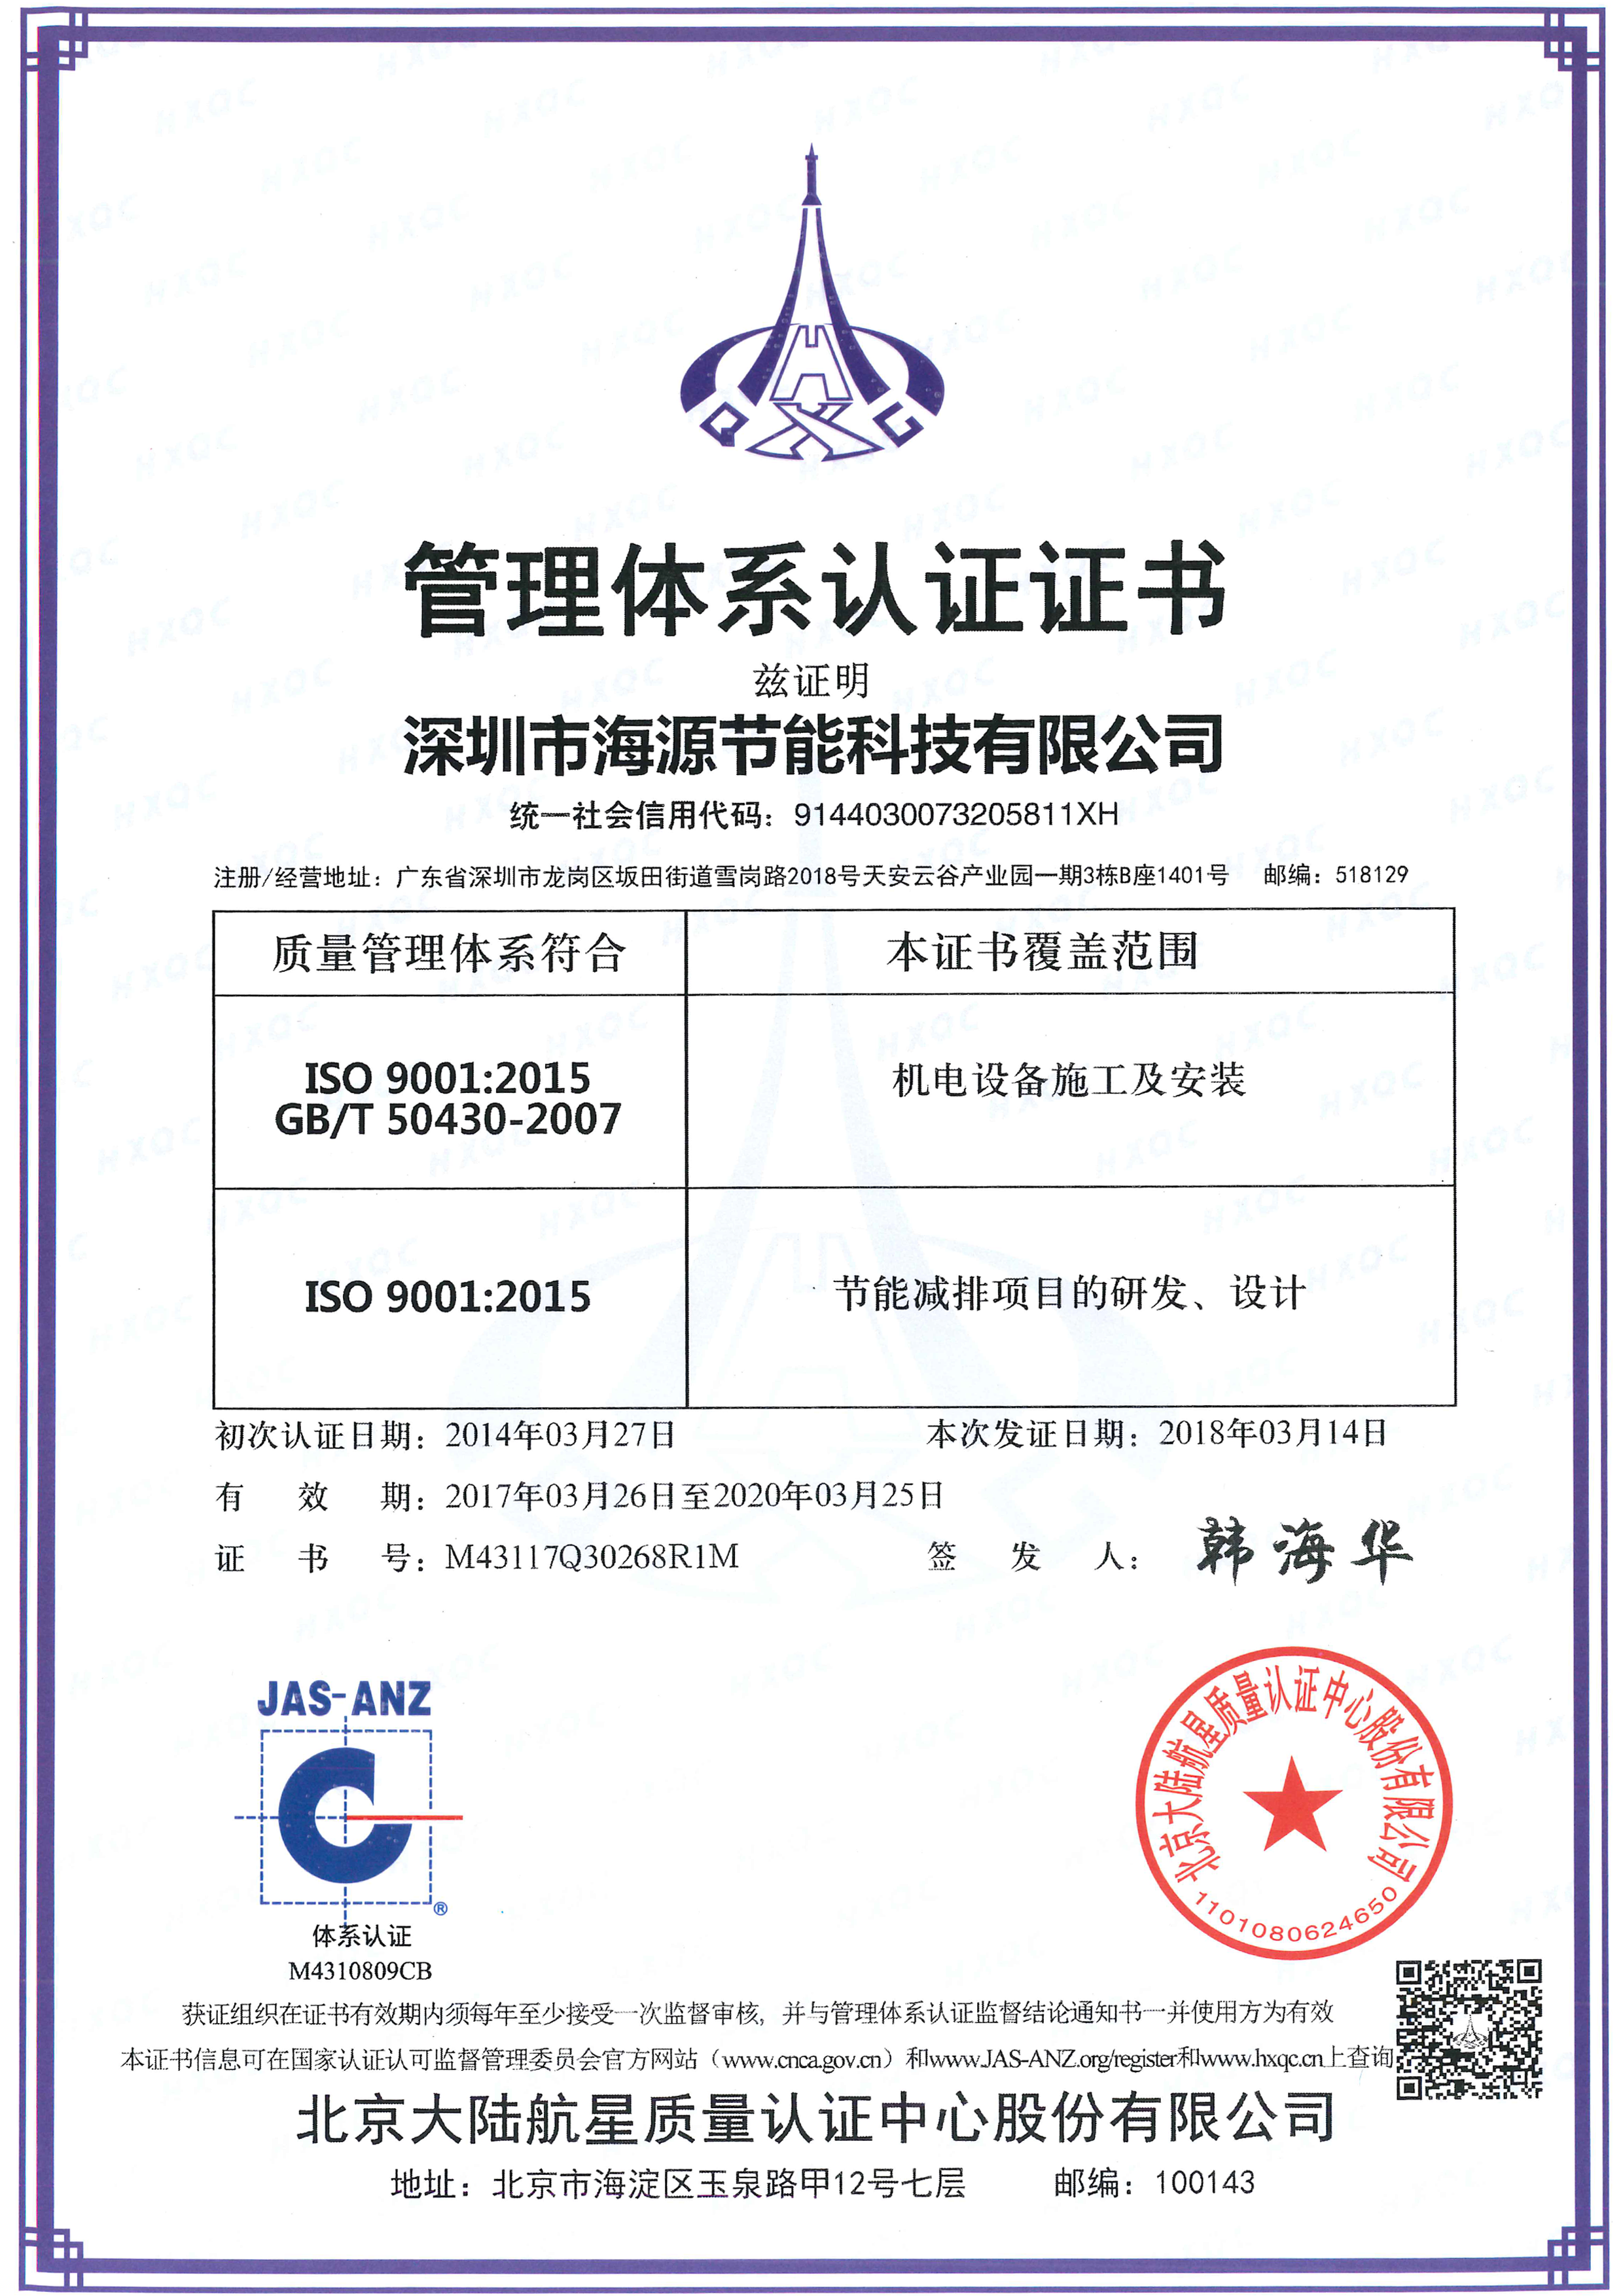 4、ISO9001 质量管理体系认证.png